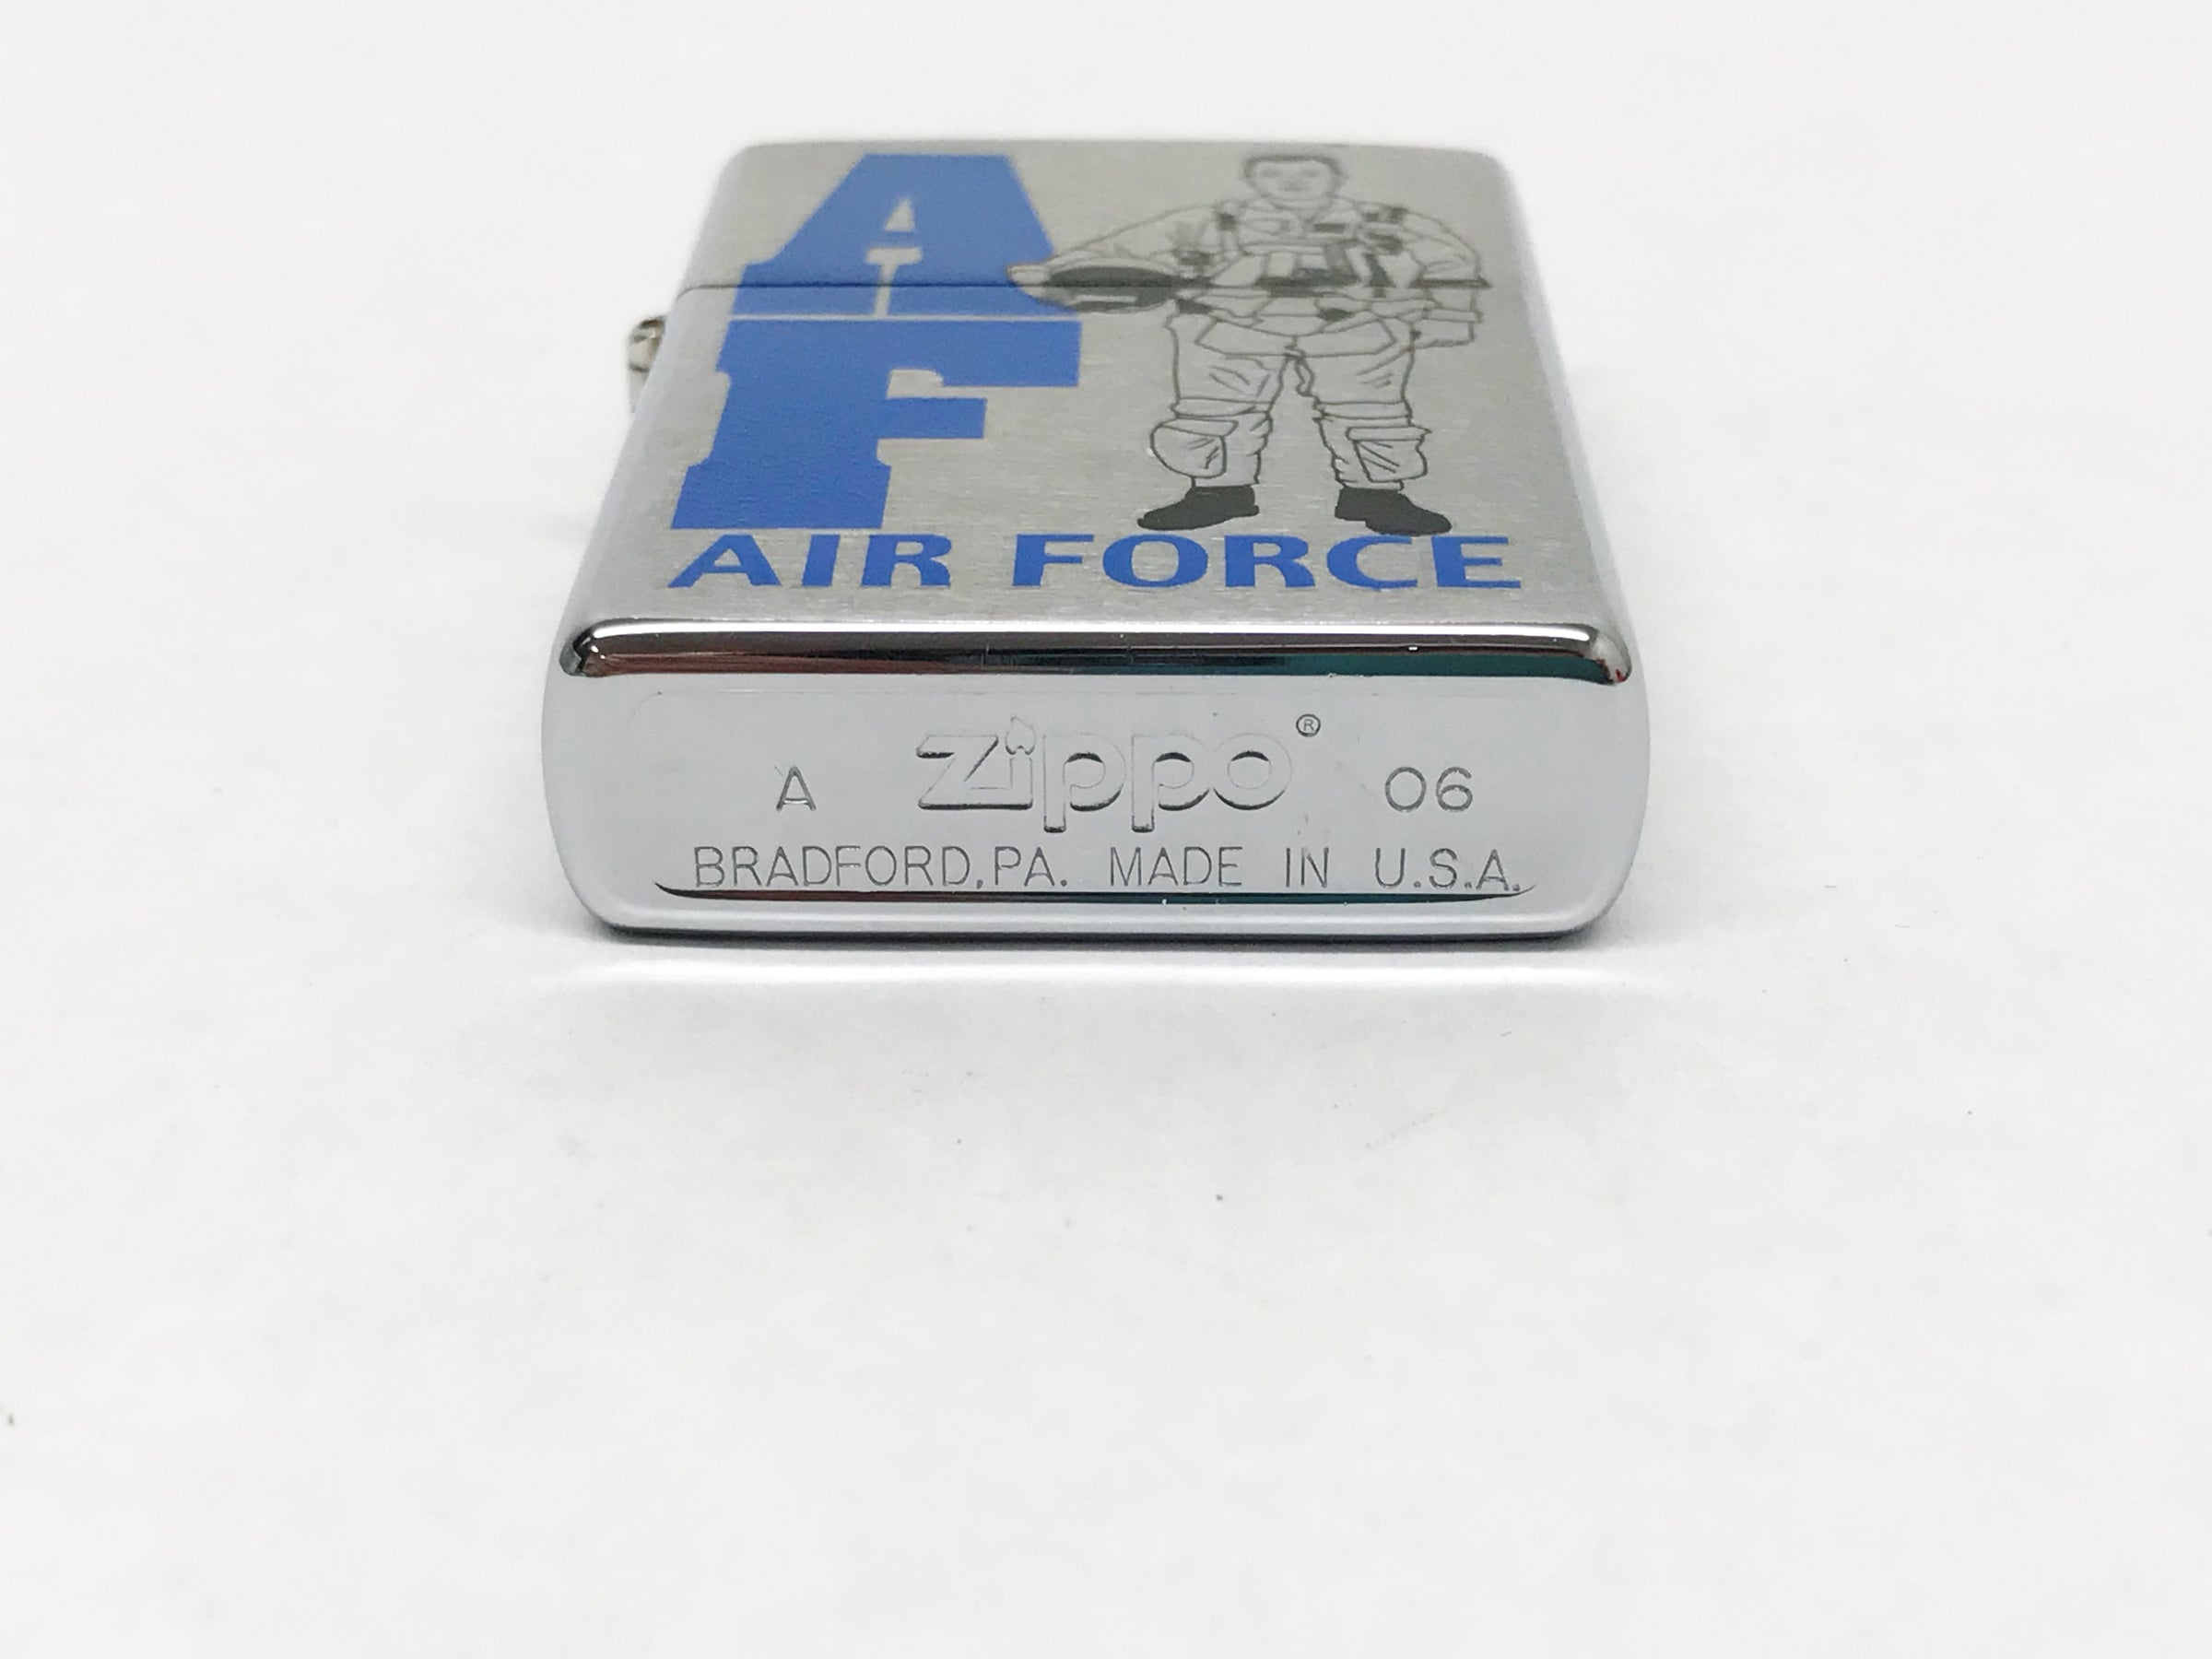 www.hersandhistreasures.com/products/2006-af-air-force-brushed-chrome-zippo-lighter